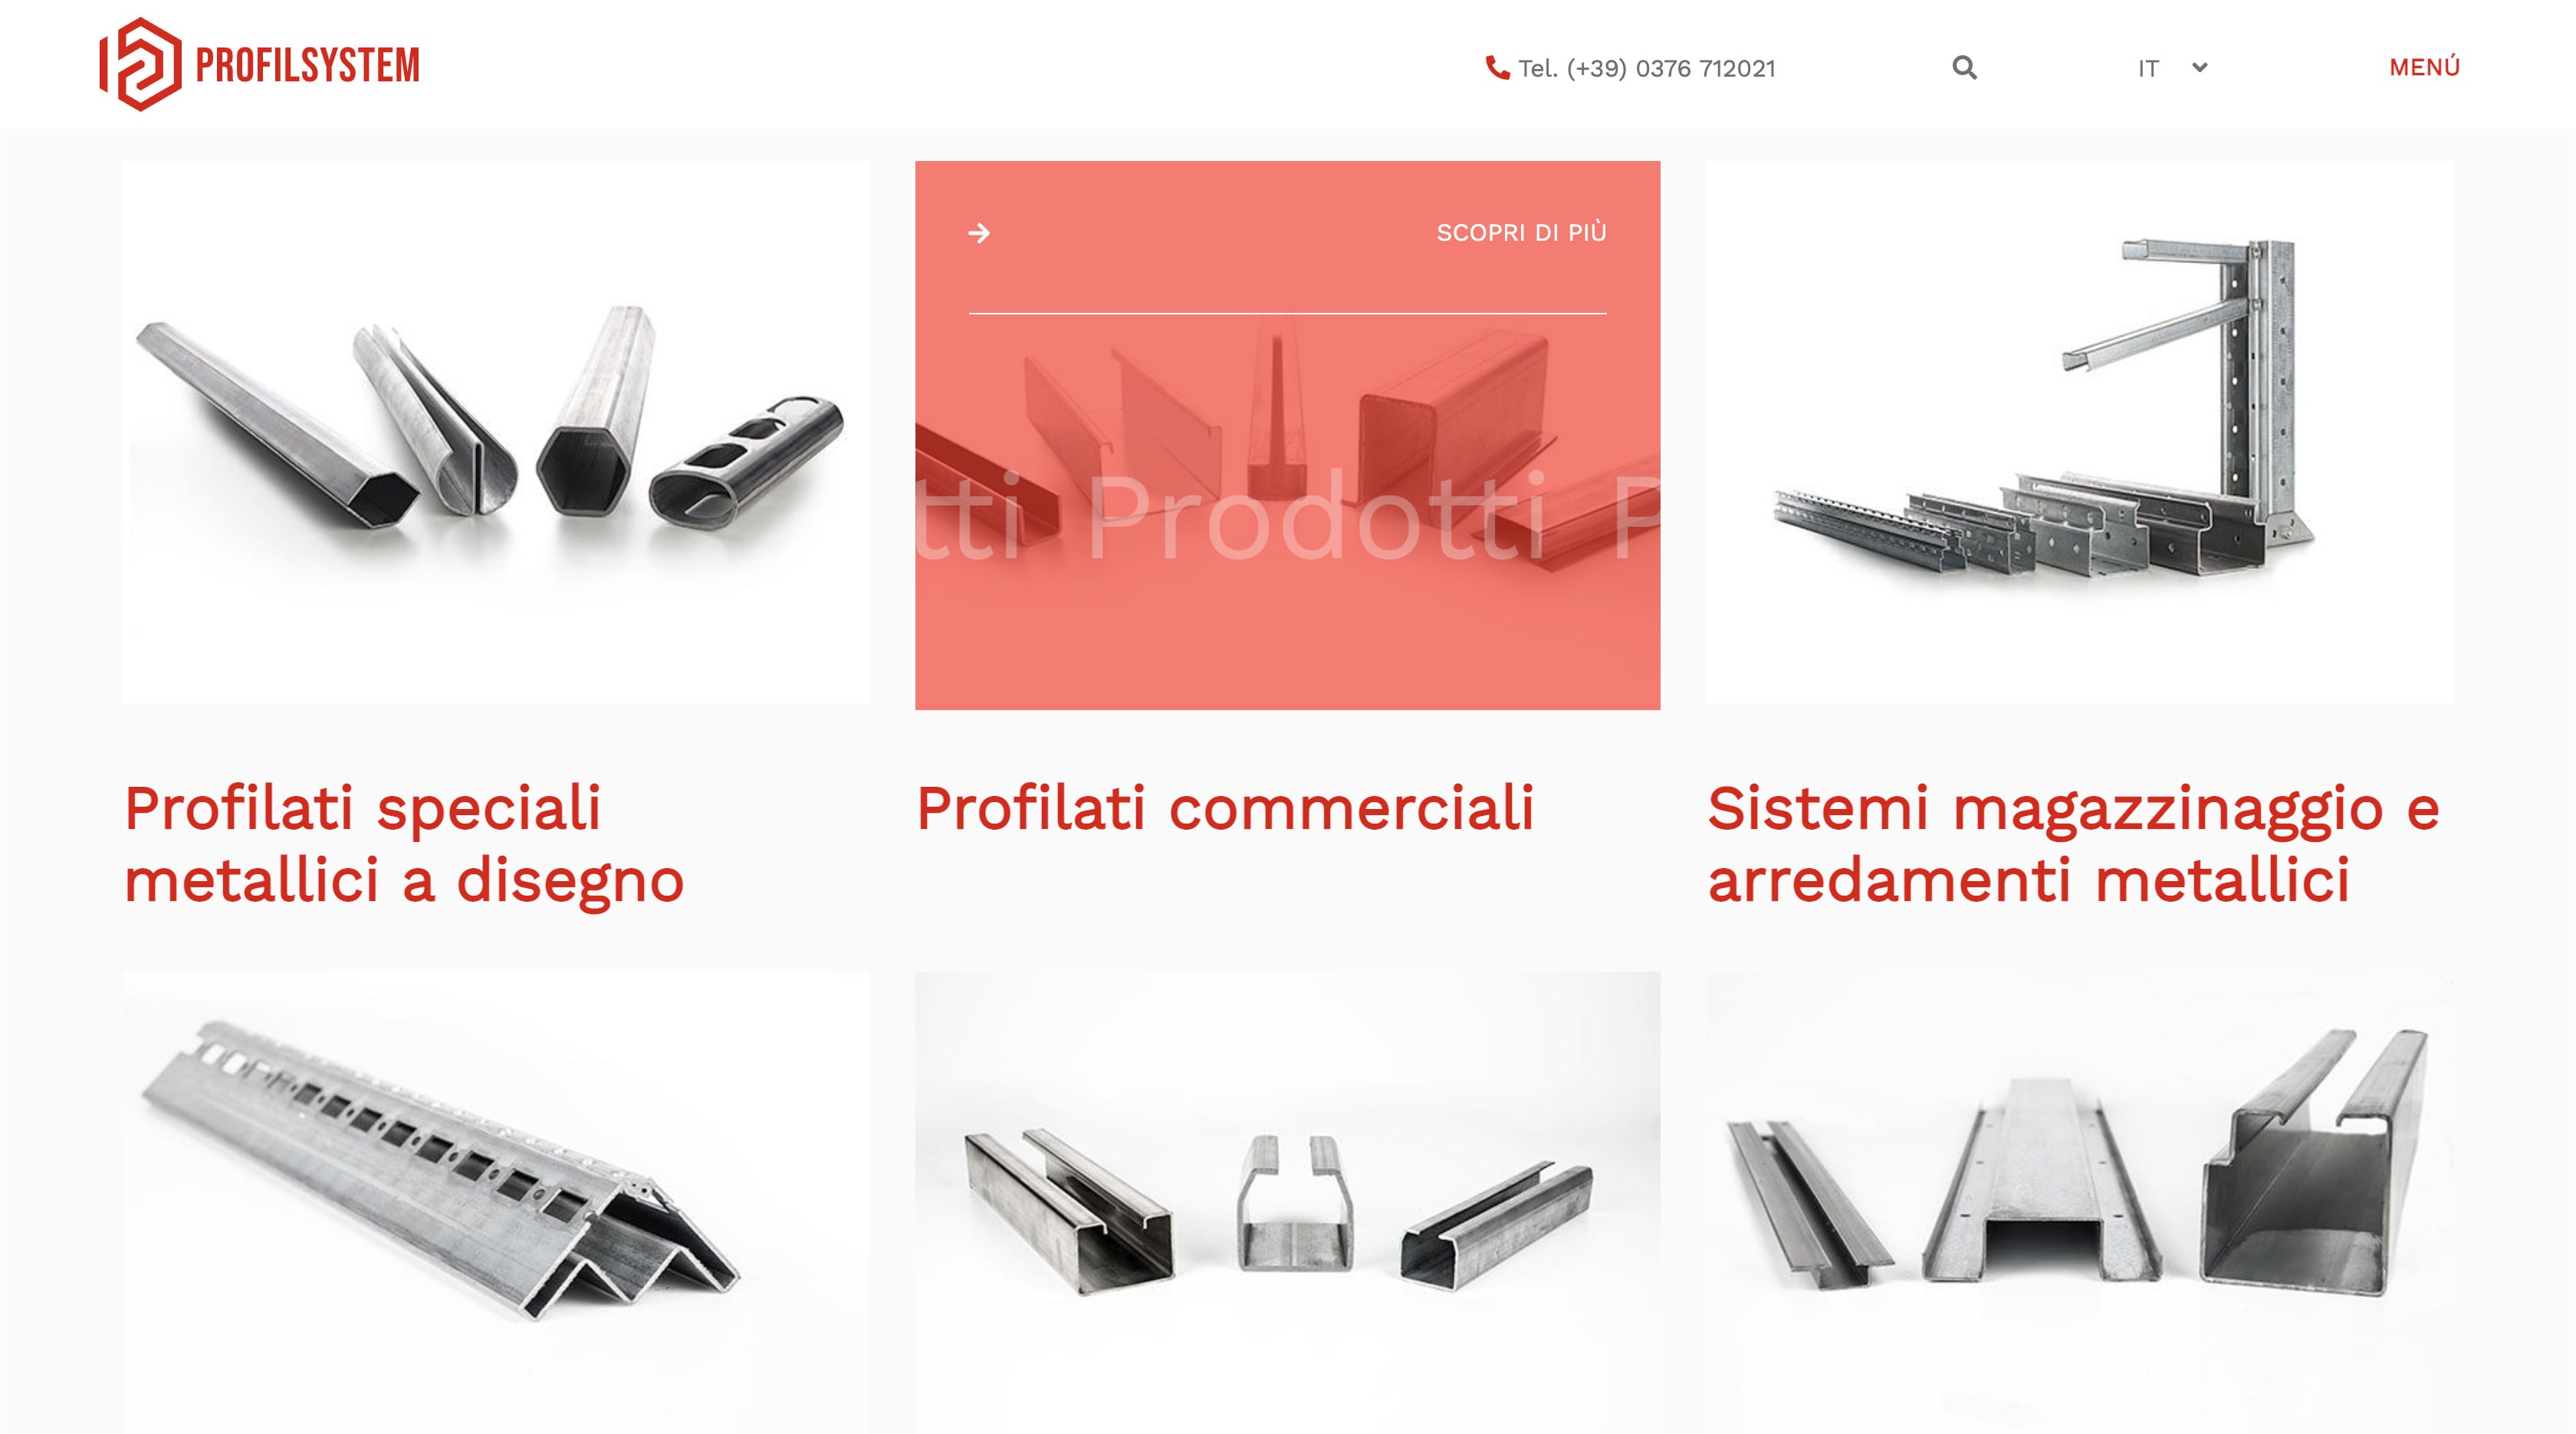 profilsystem website products menu